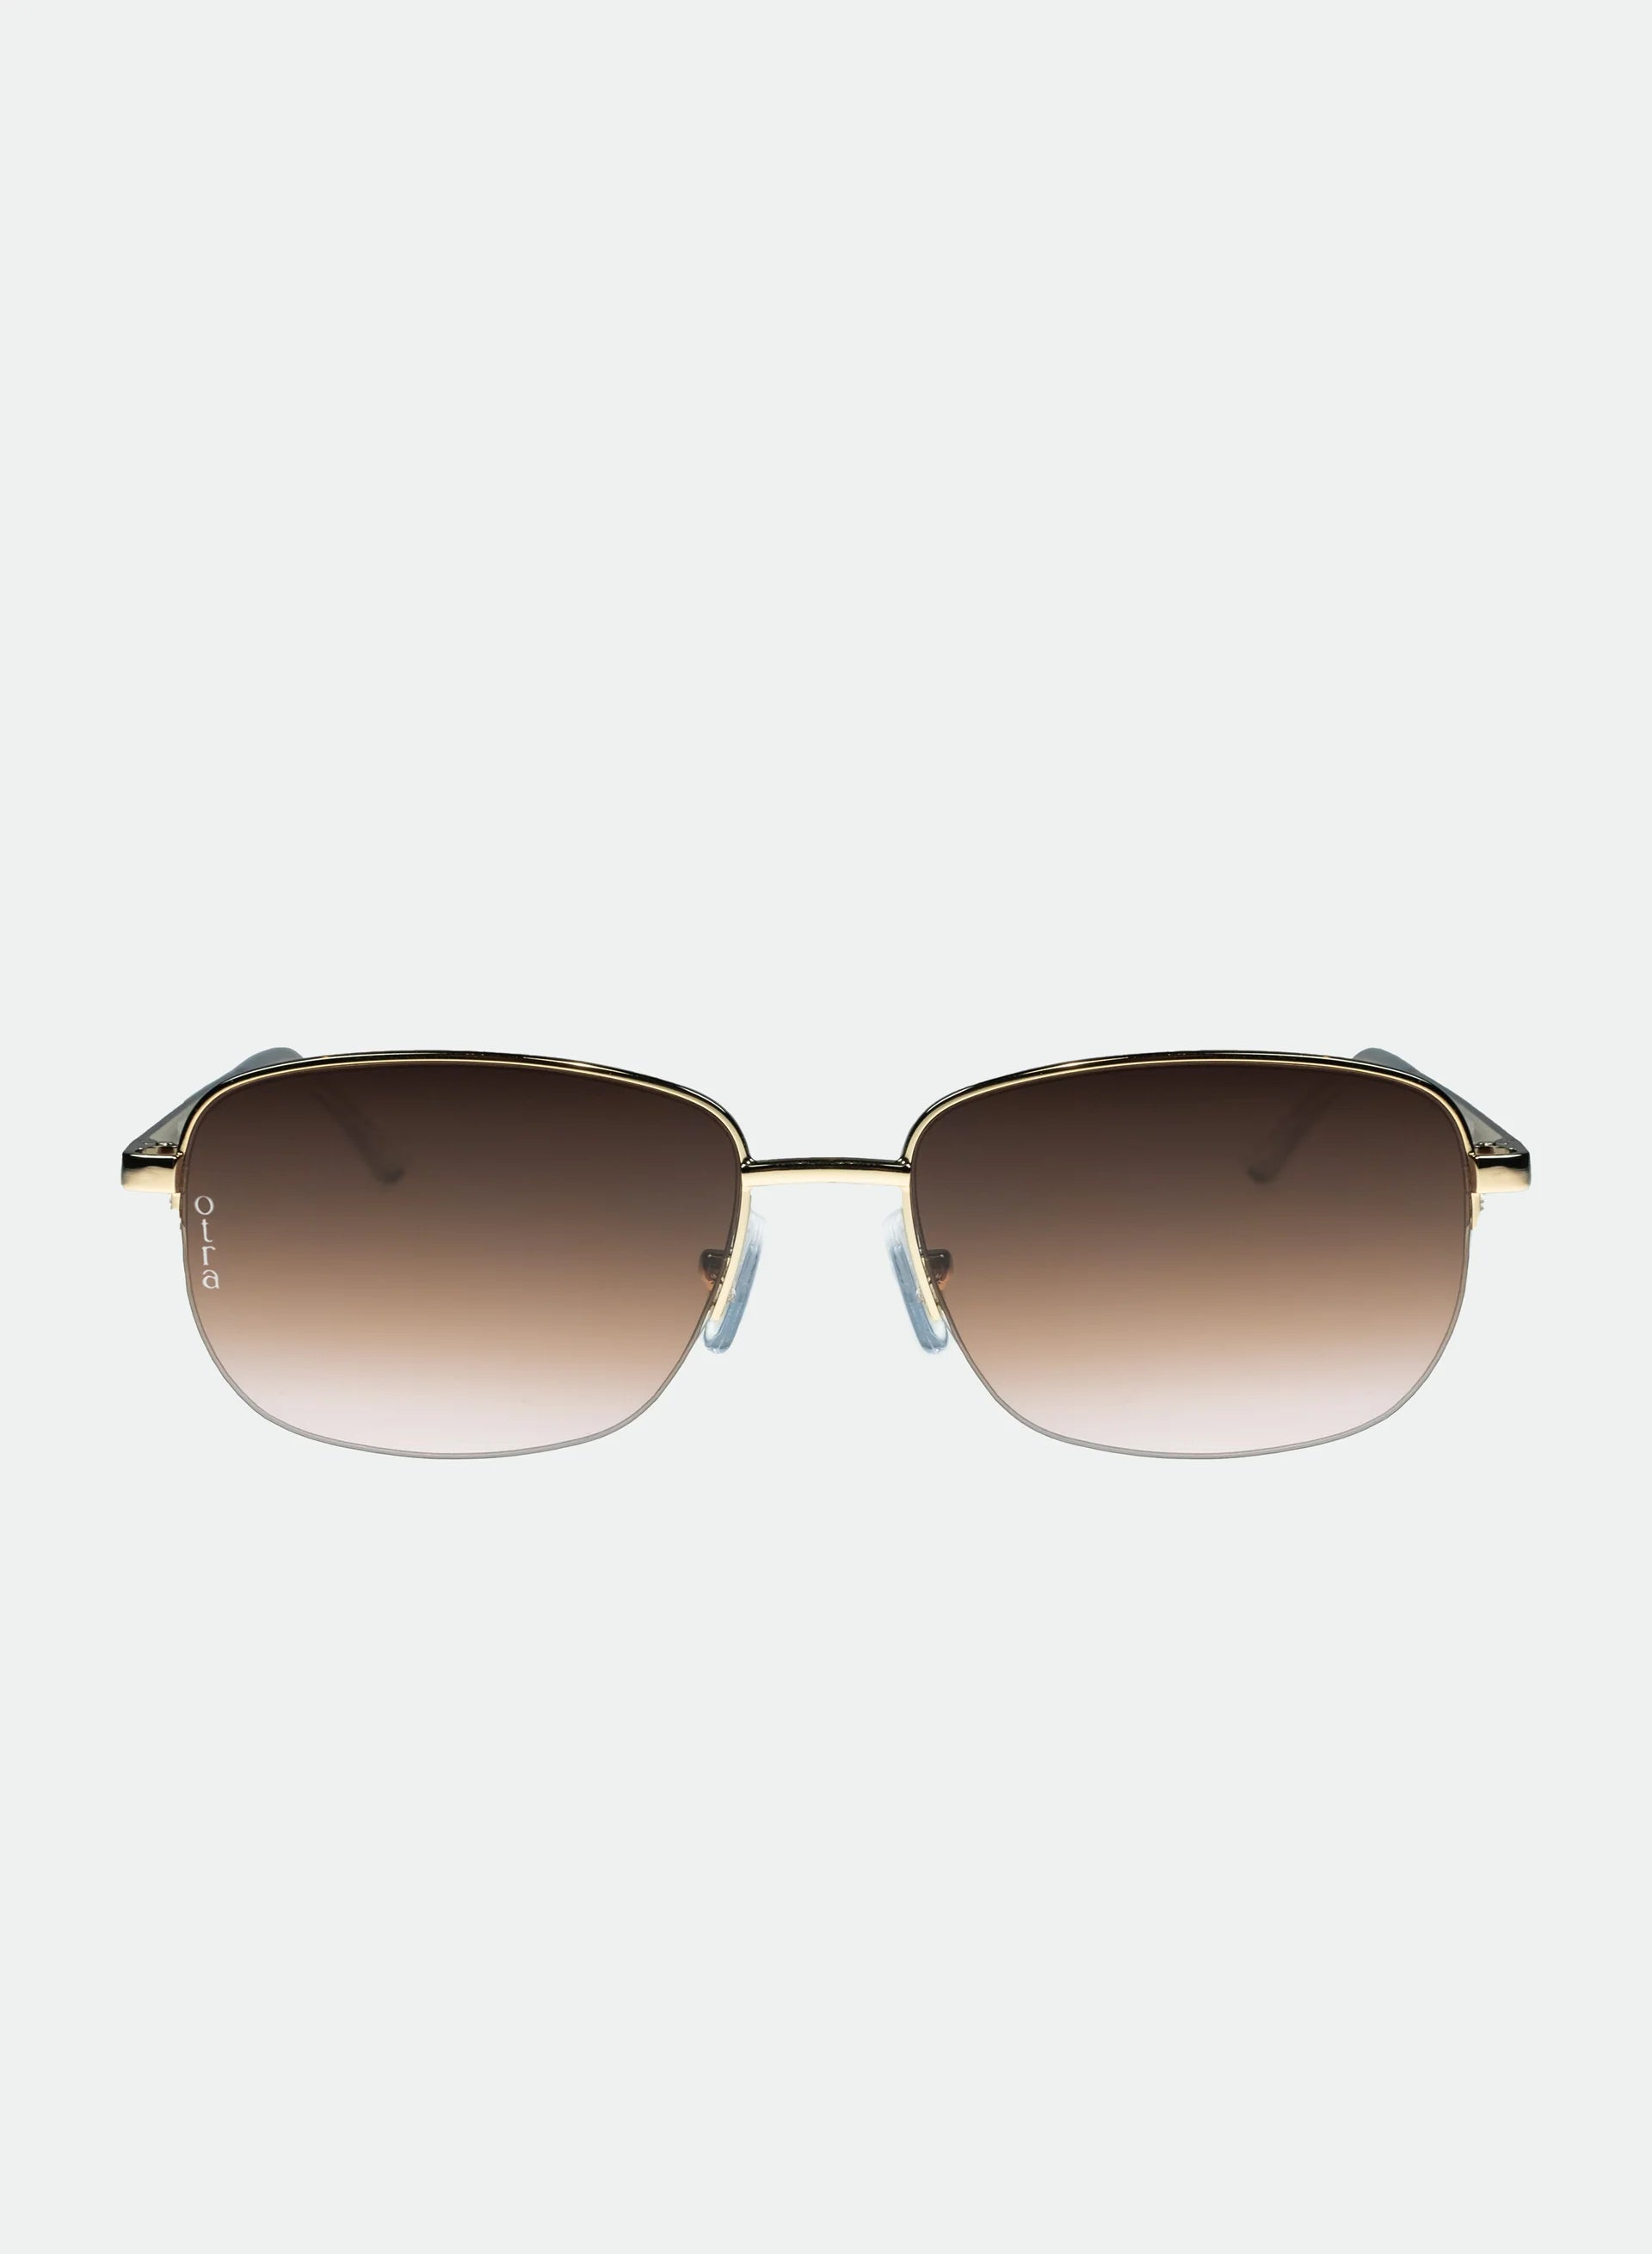 Jr. Sunglasses Gold Brown-Pink Fade